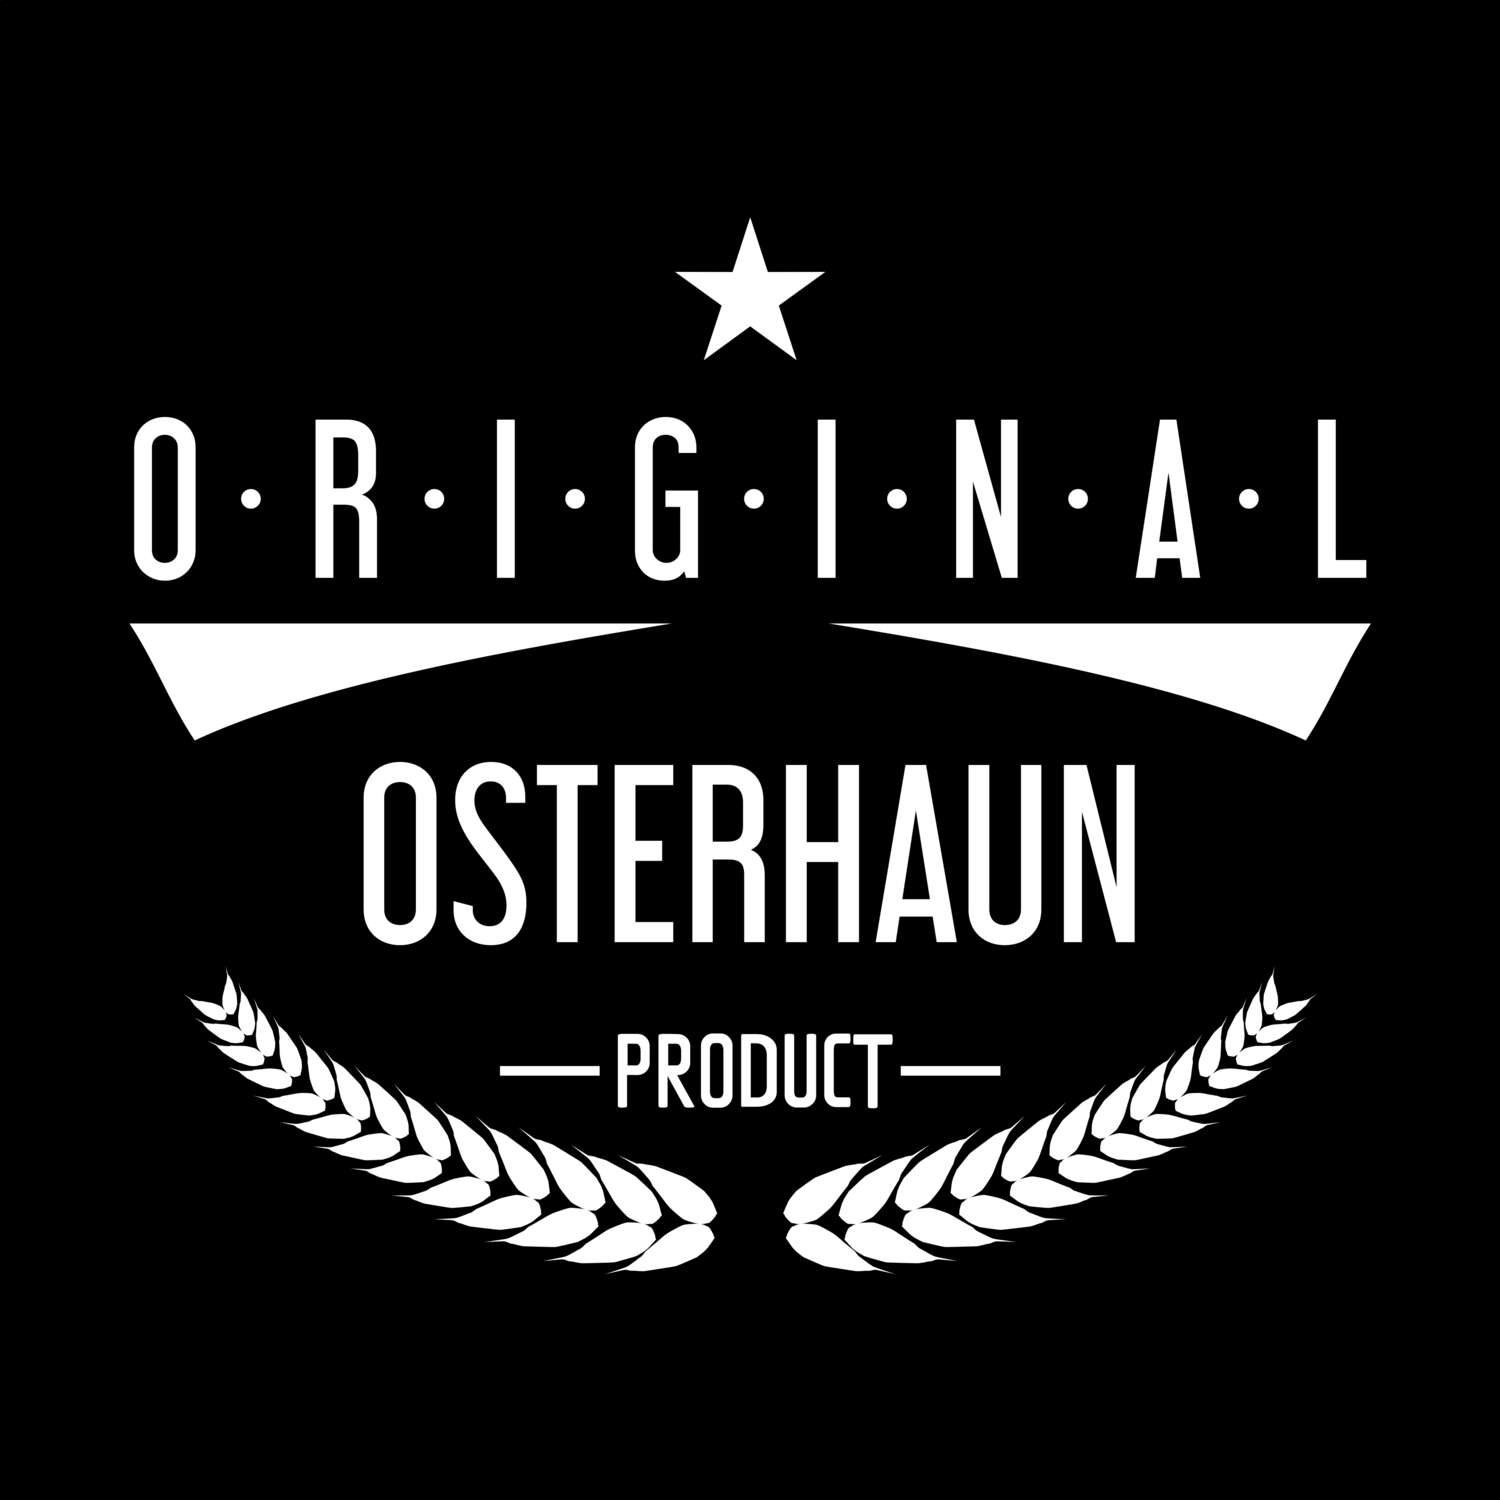 Osterhaun T-Shirt »Original Product«